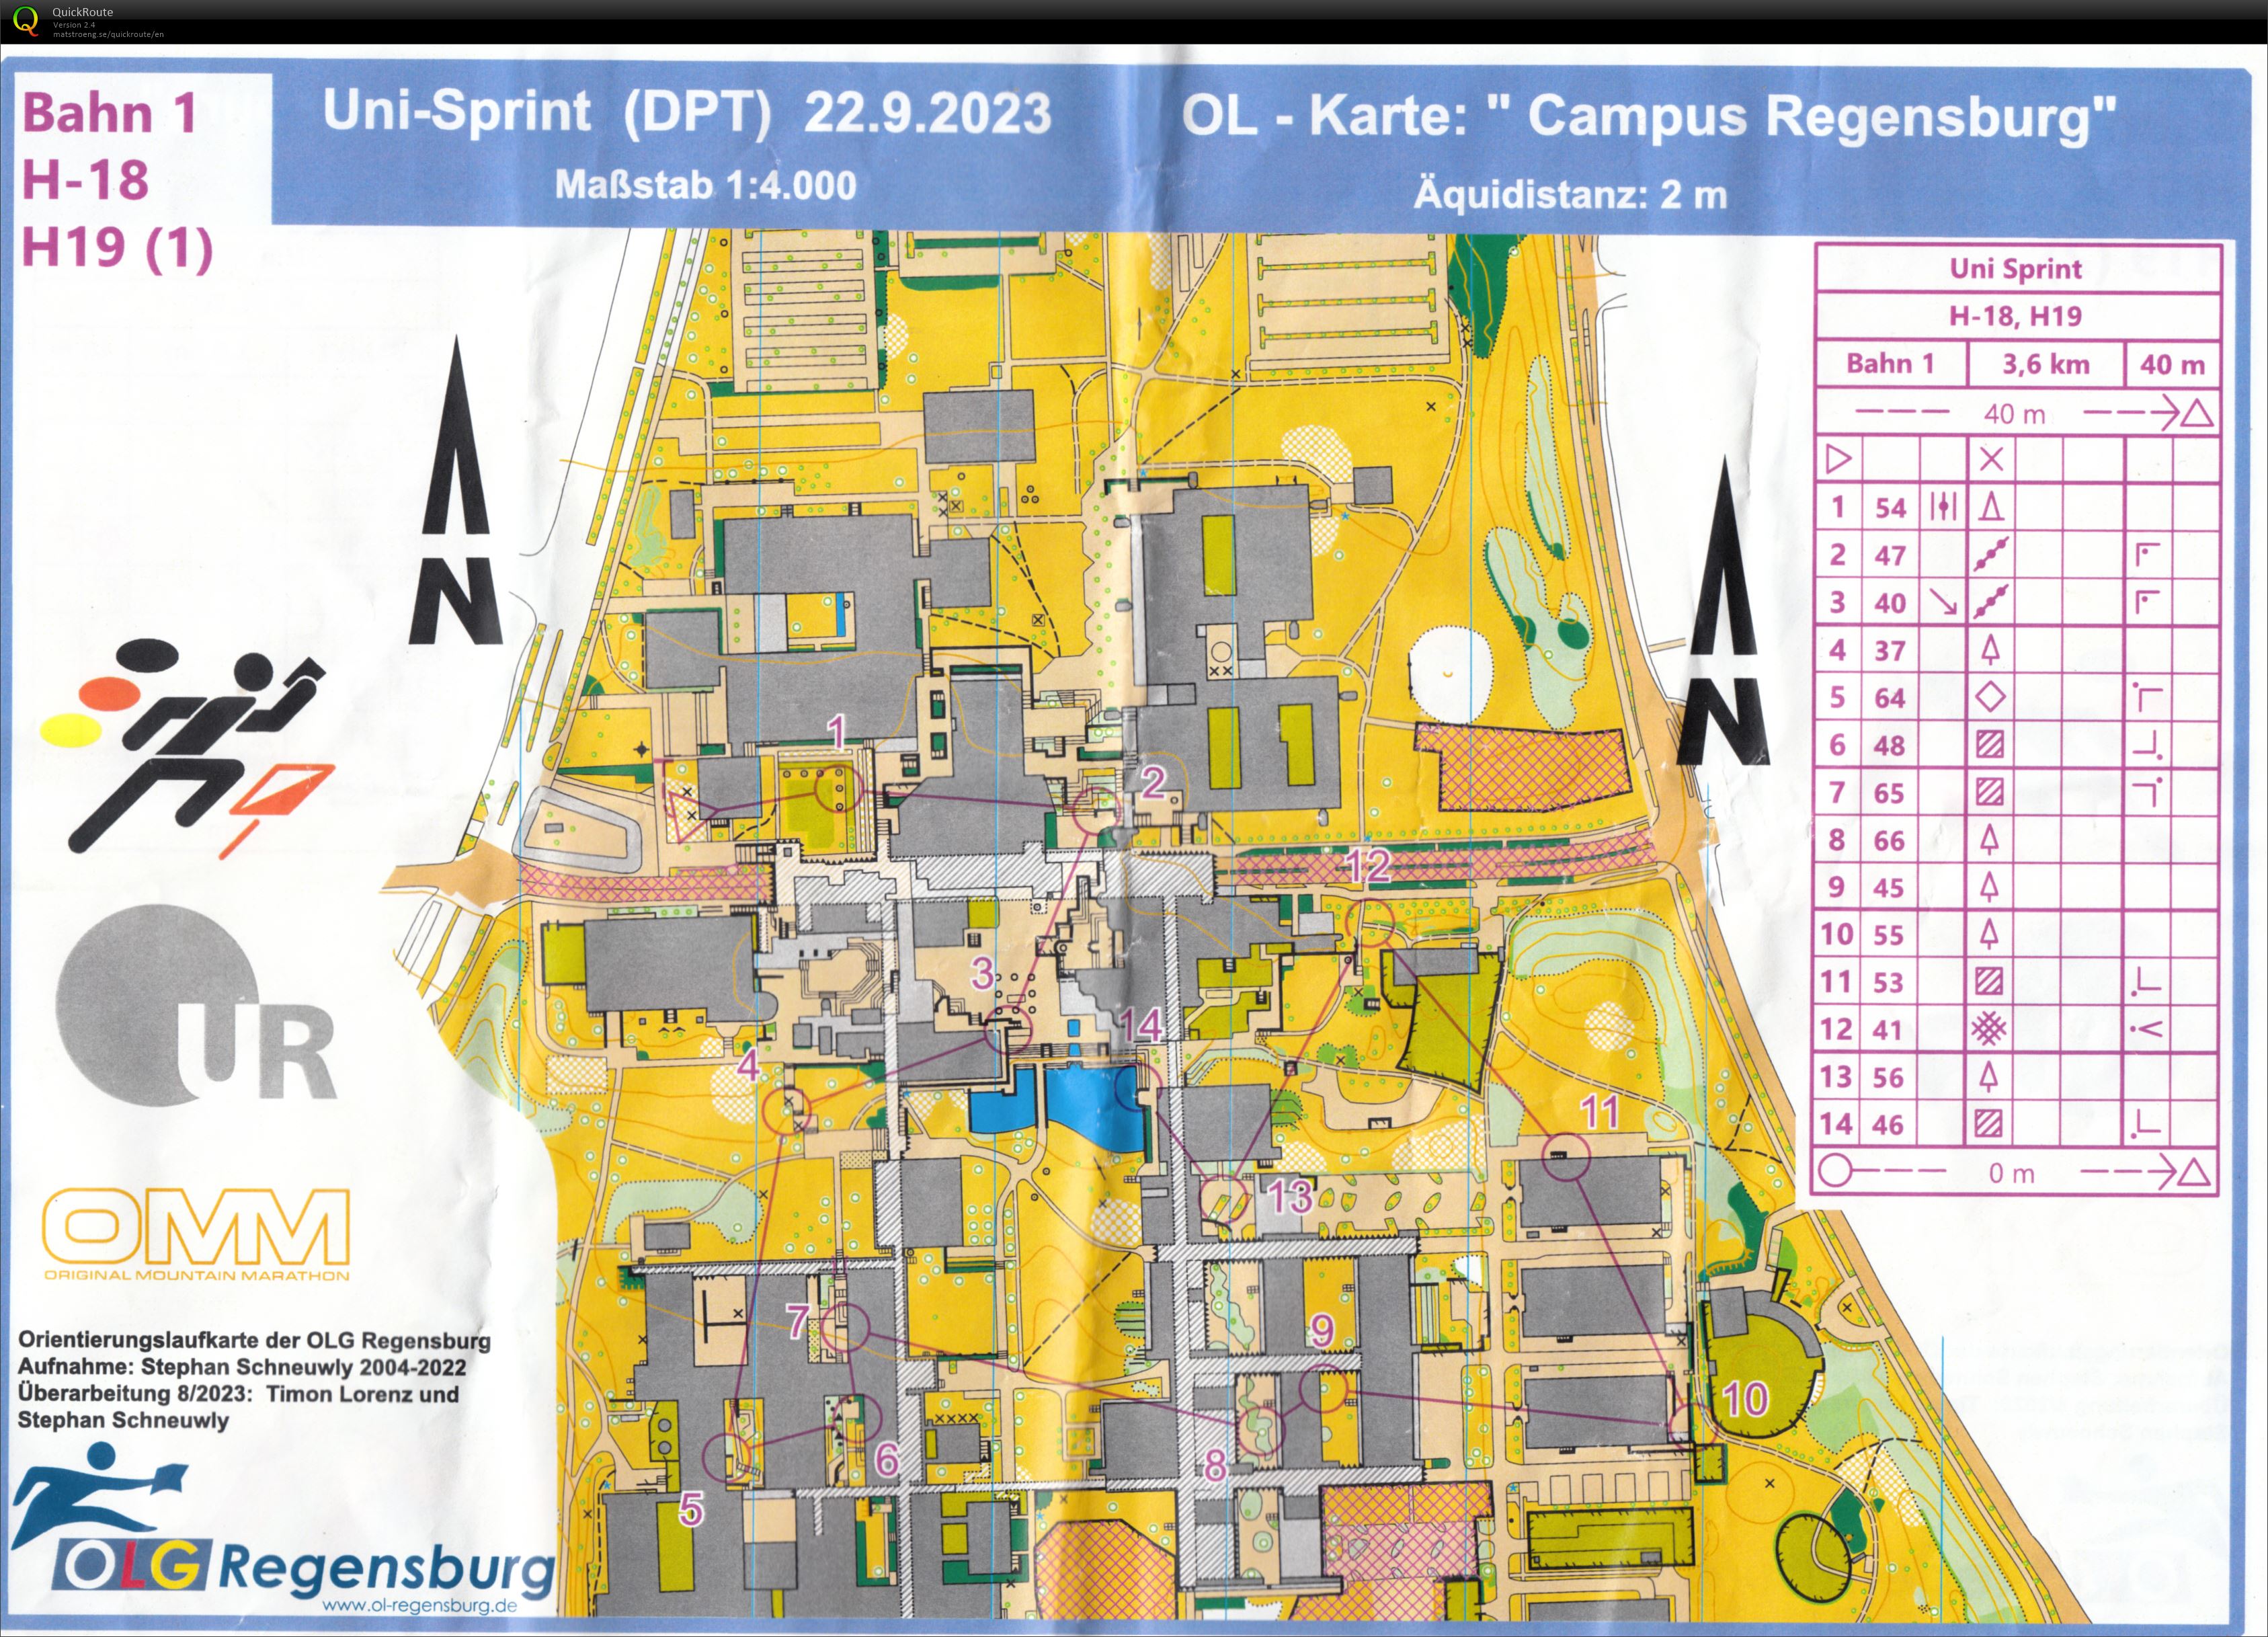 Uni-Sprint Regensburg - part 1 (2023-09-22)